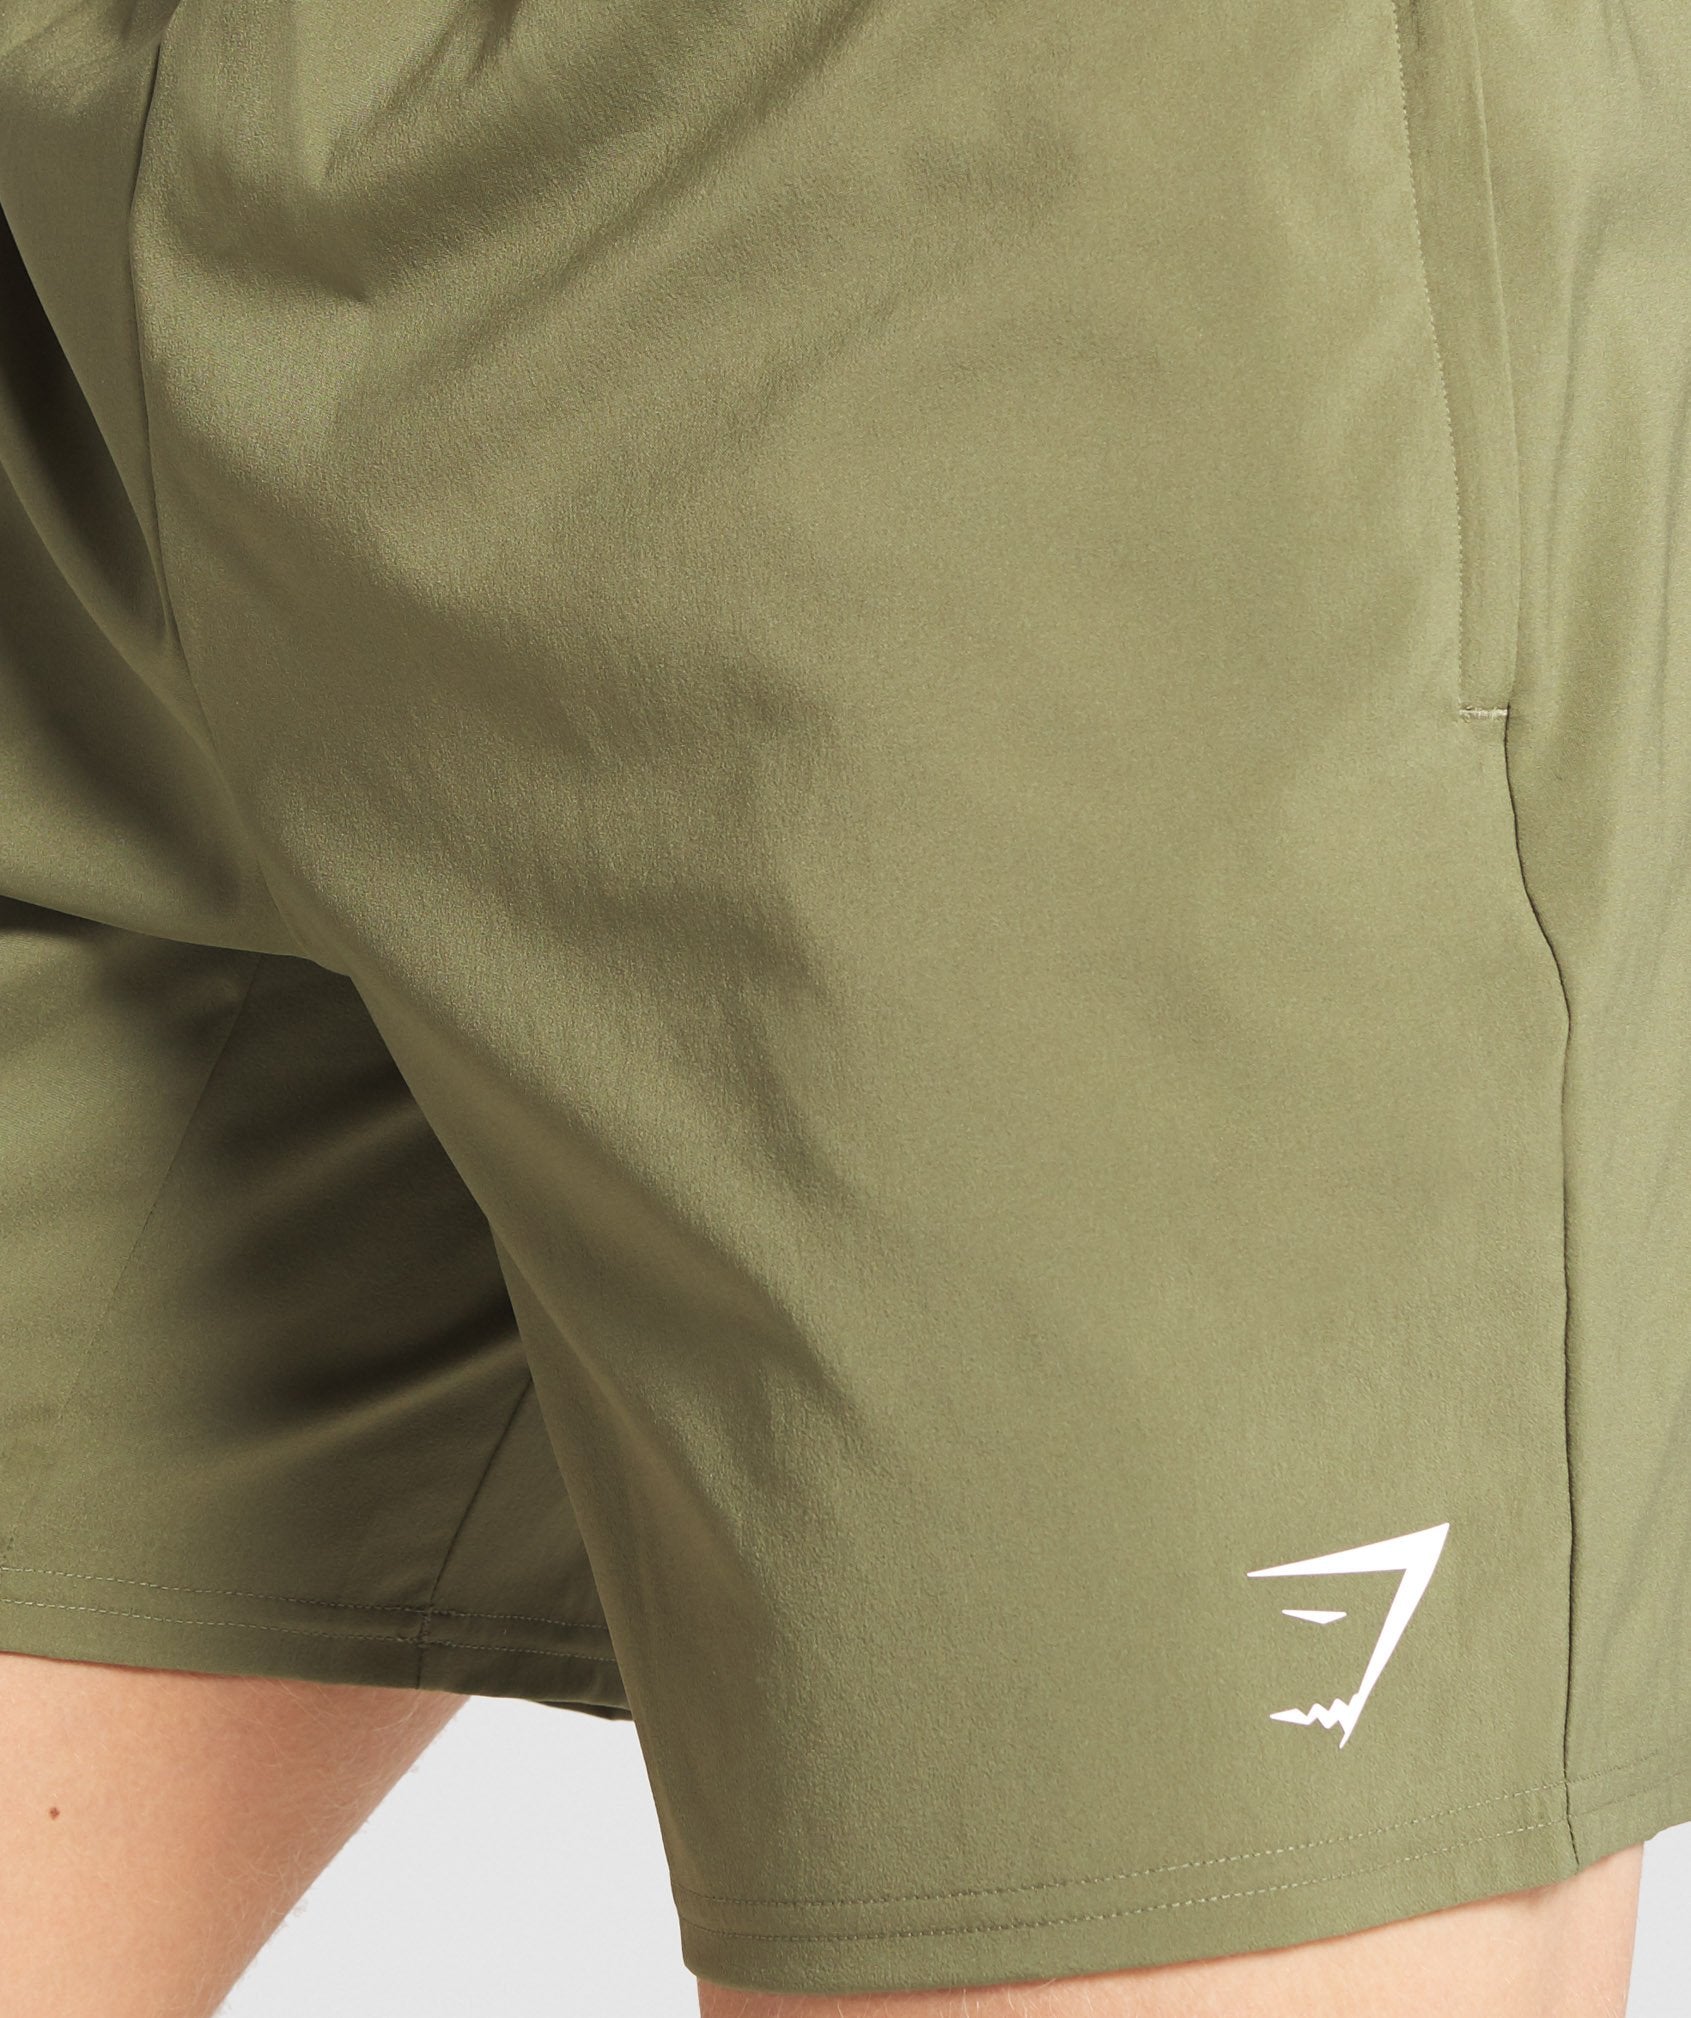 Arrival Zip Pocket Shorts in Dark Green